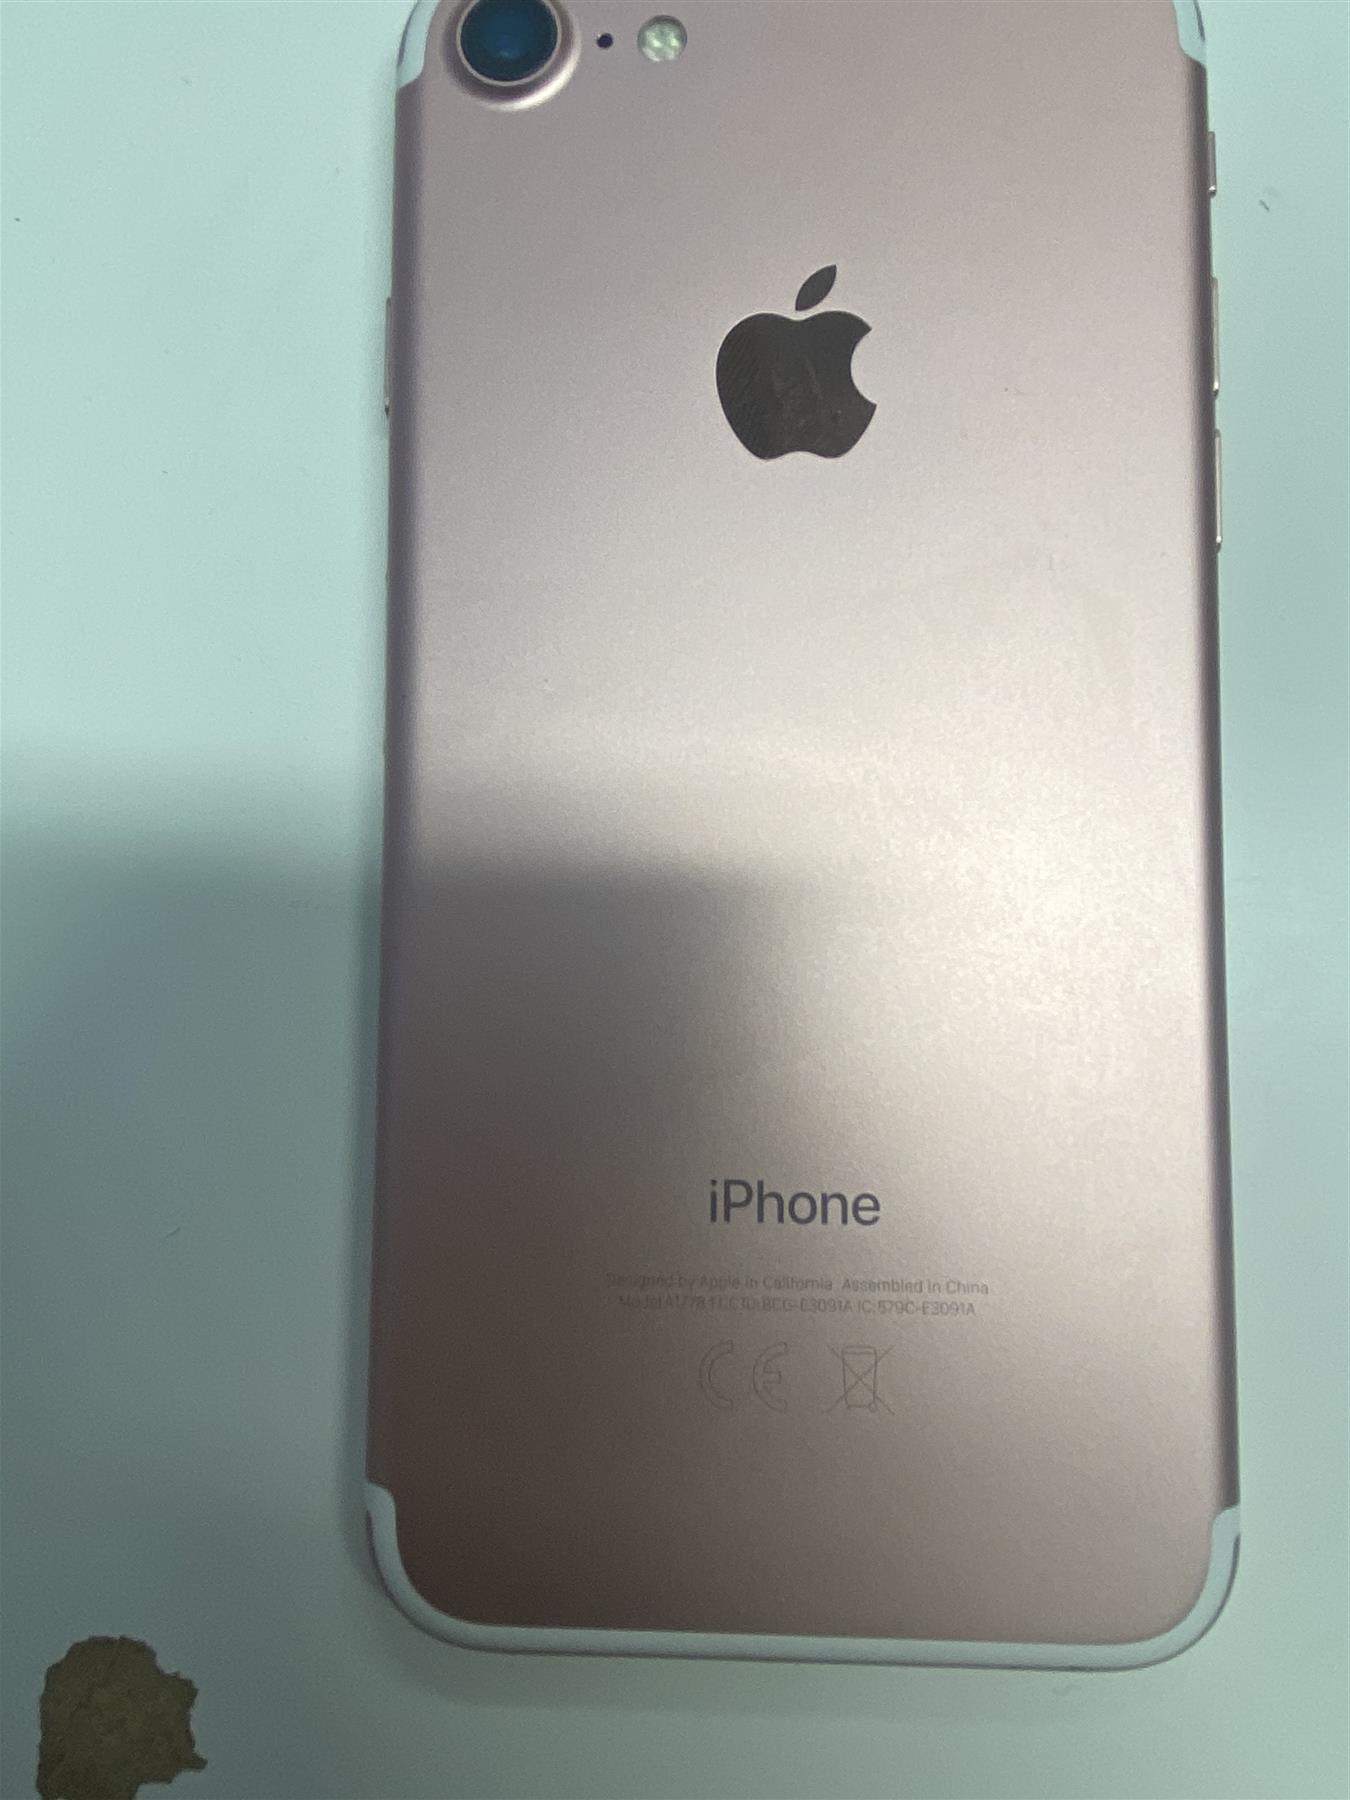 Apple iPhone 7 32GB Rose Gold Unlocked Used